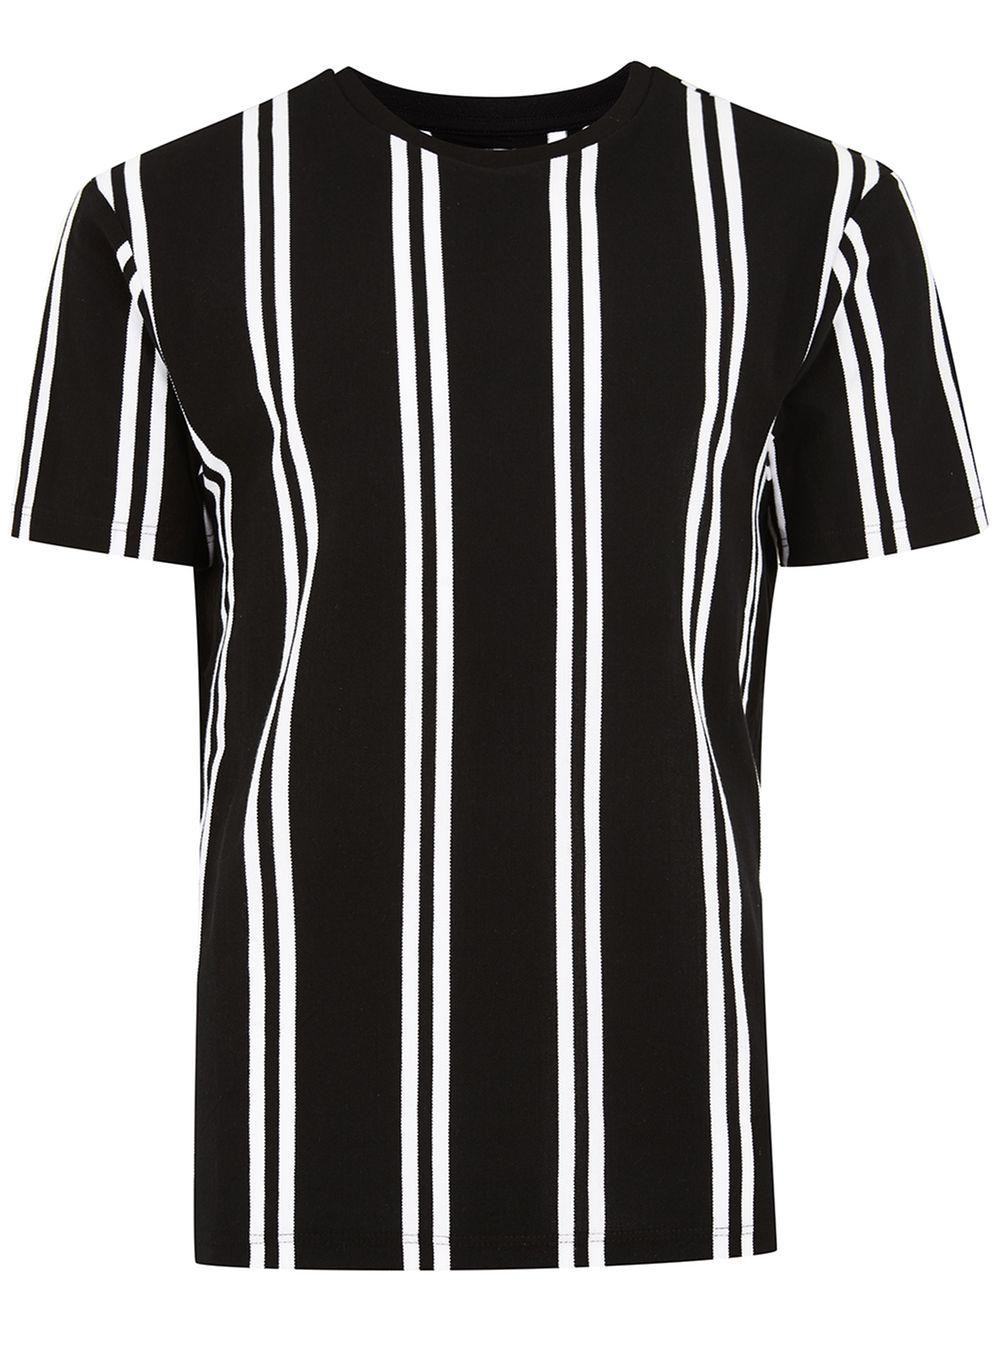 Lyst - Topman Black Slim Vertical Stripe T-shirt in Black for Men